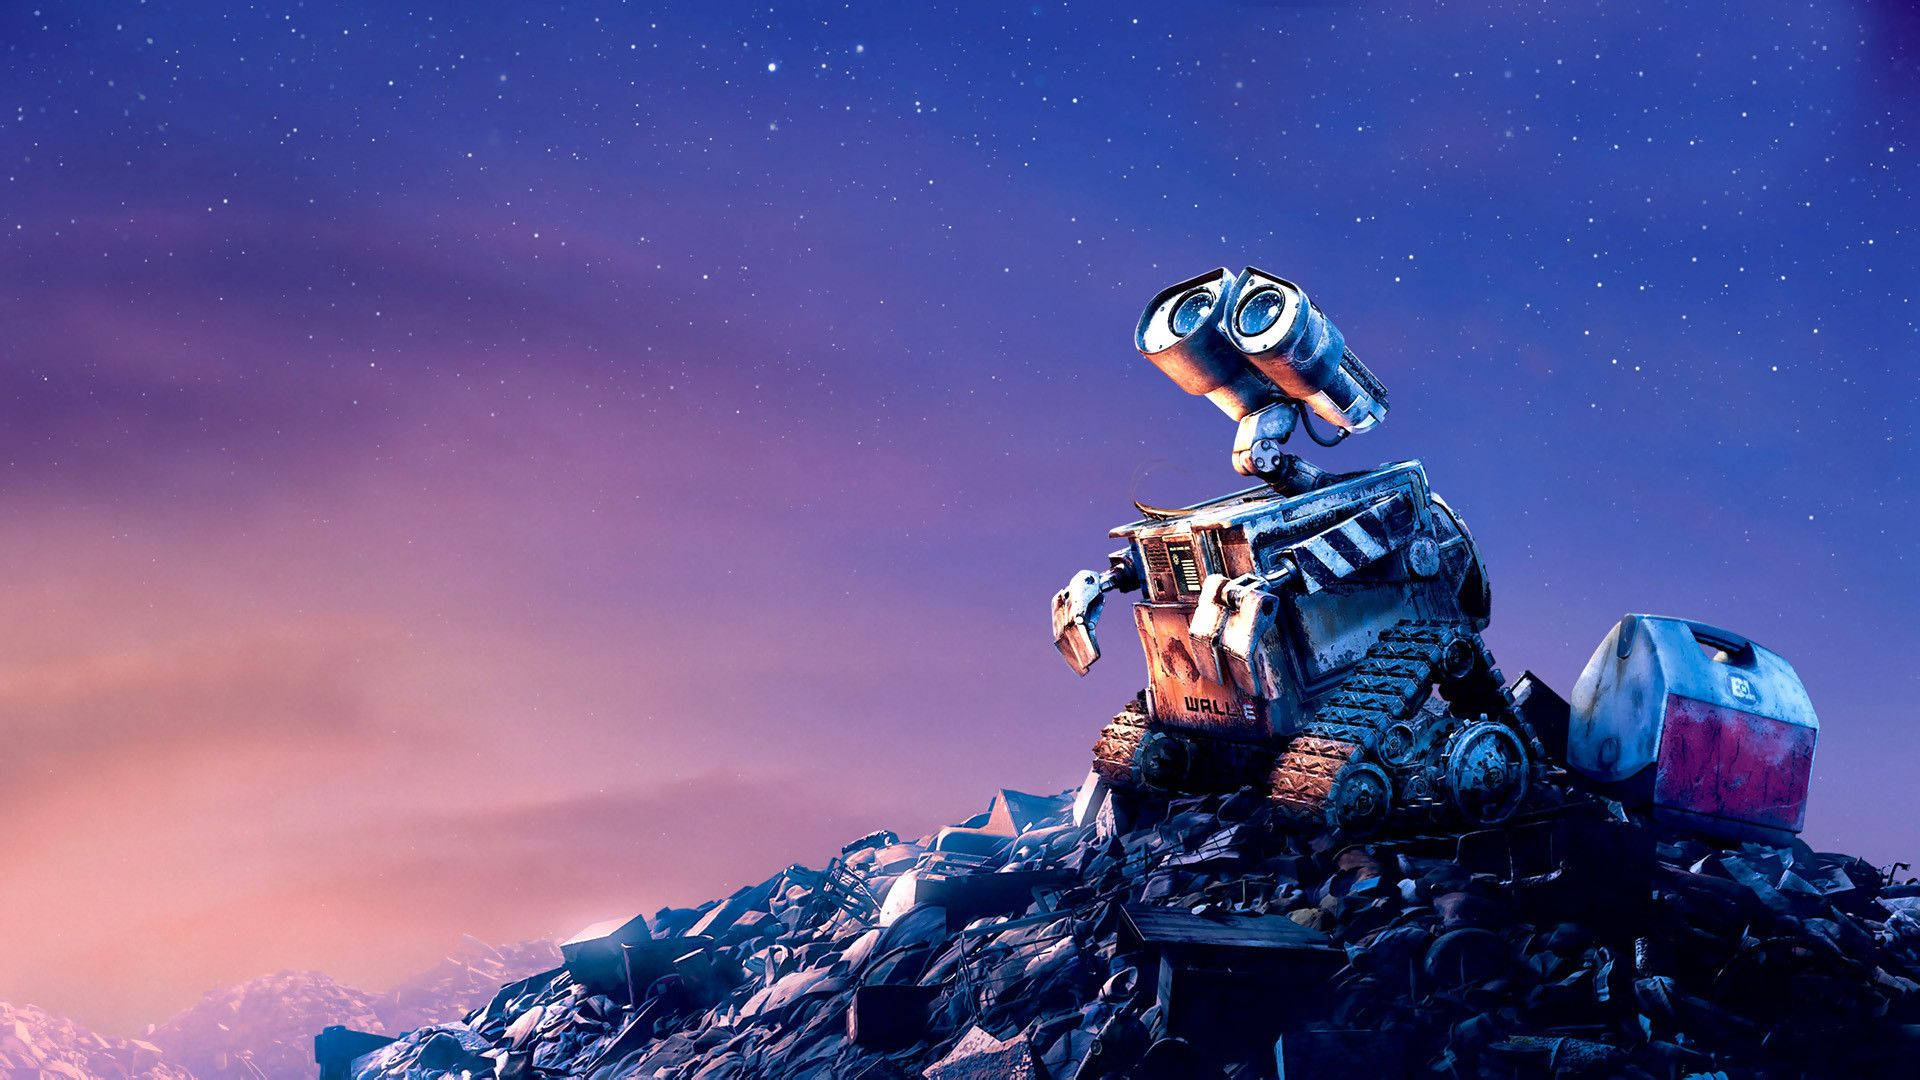 Wall-e Movie Digital Cover Background